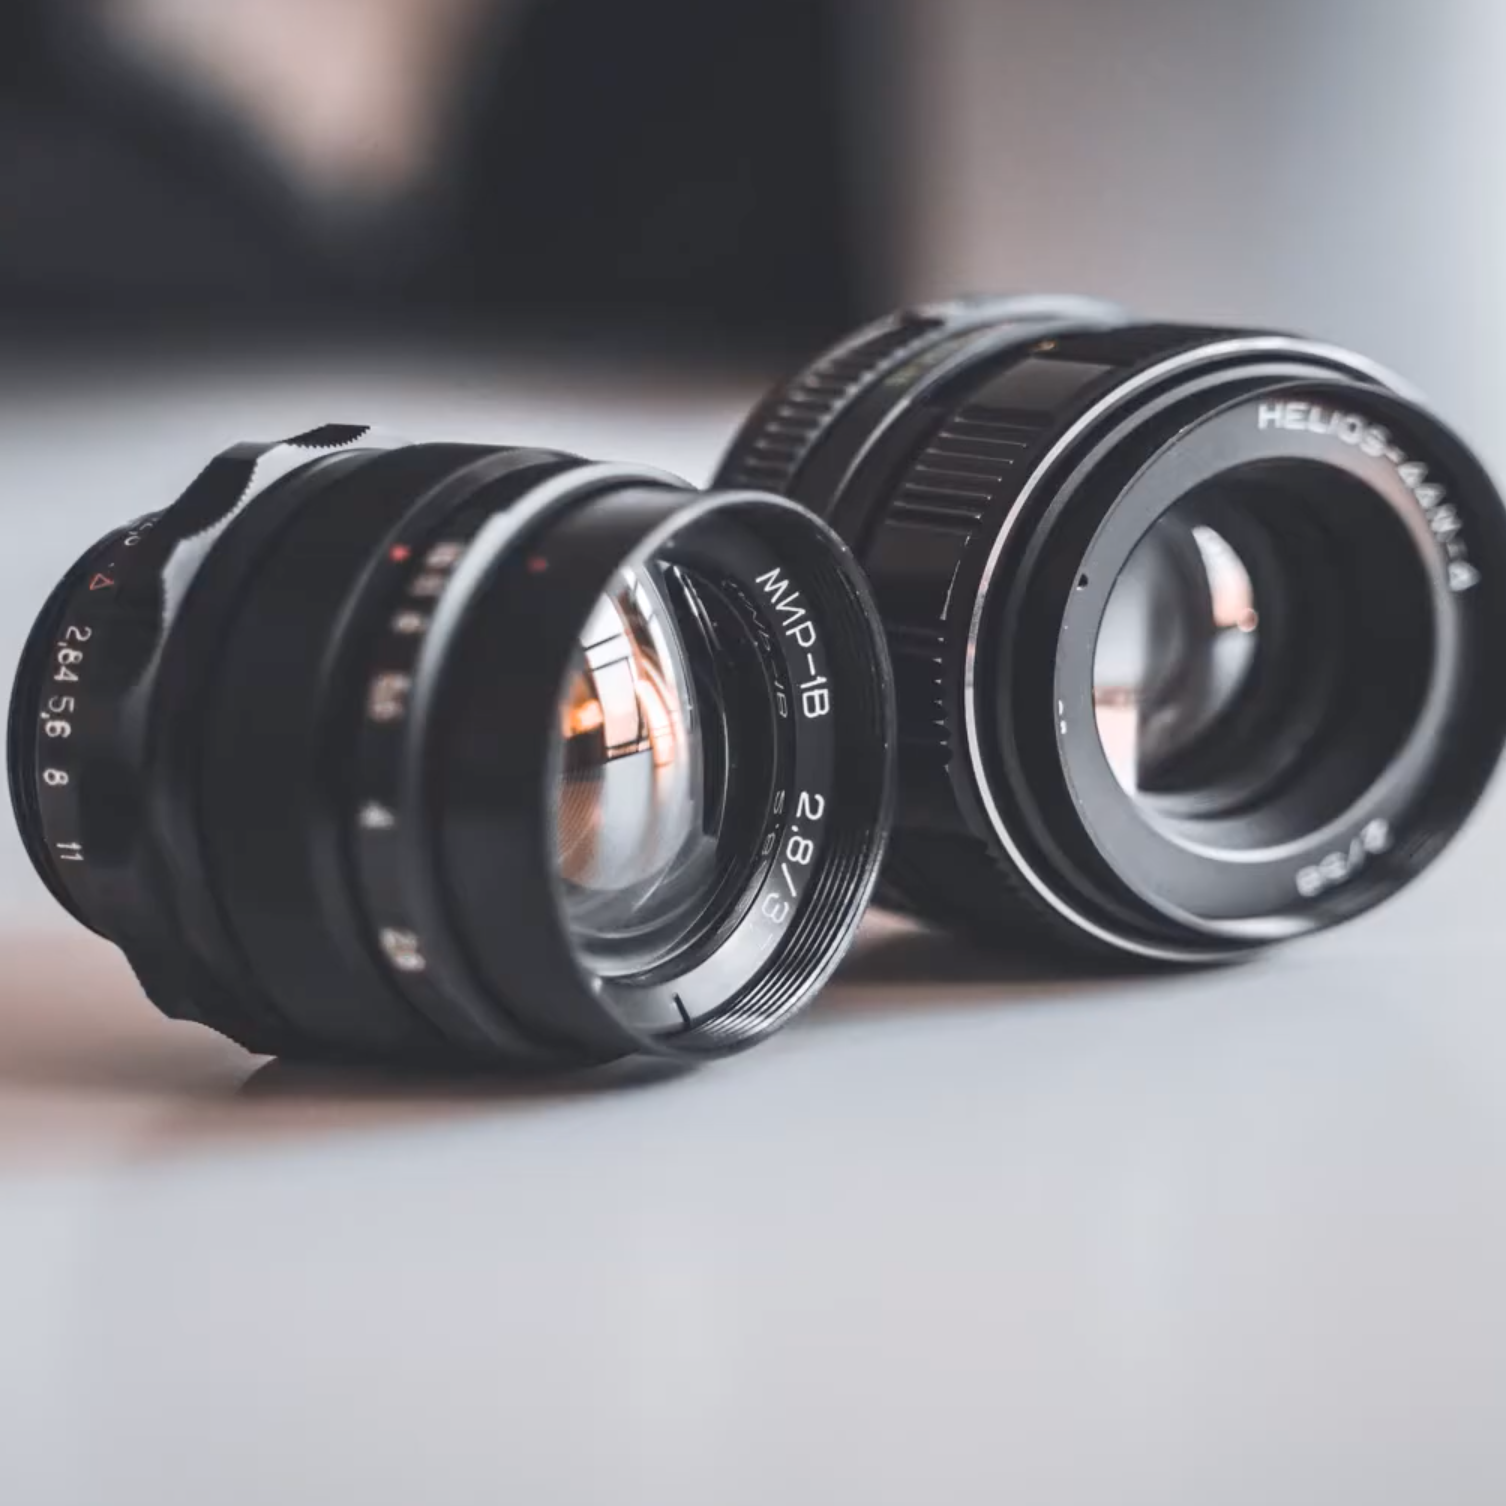 Two camera lenses in focus